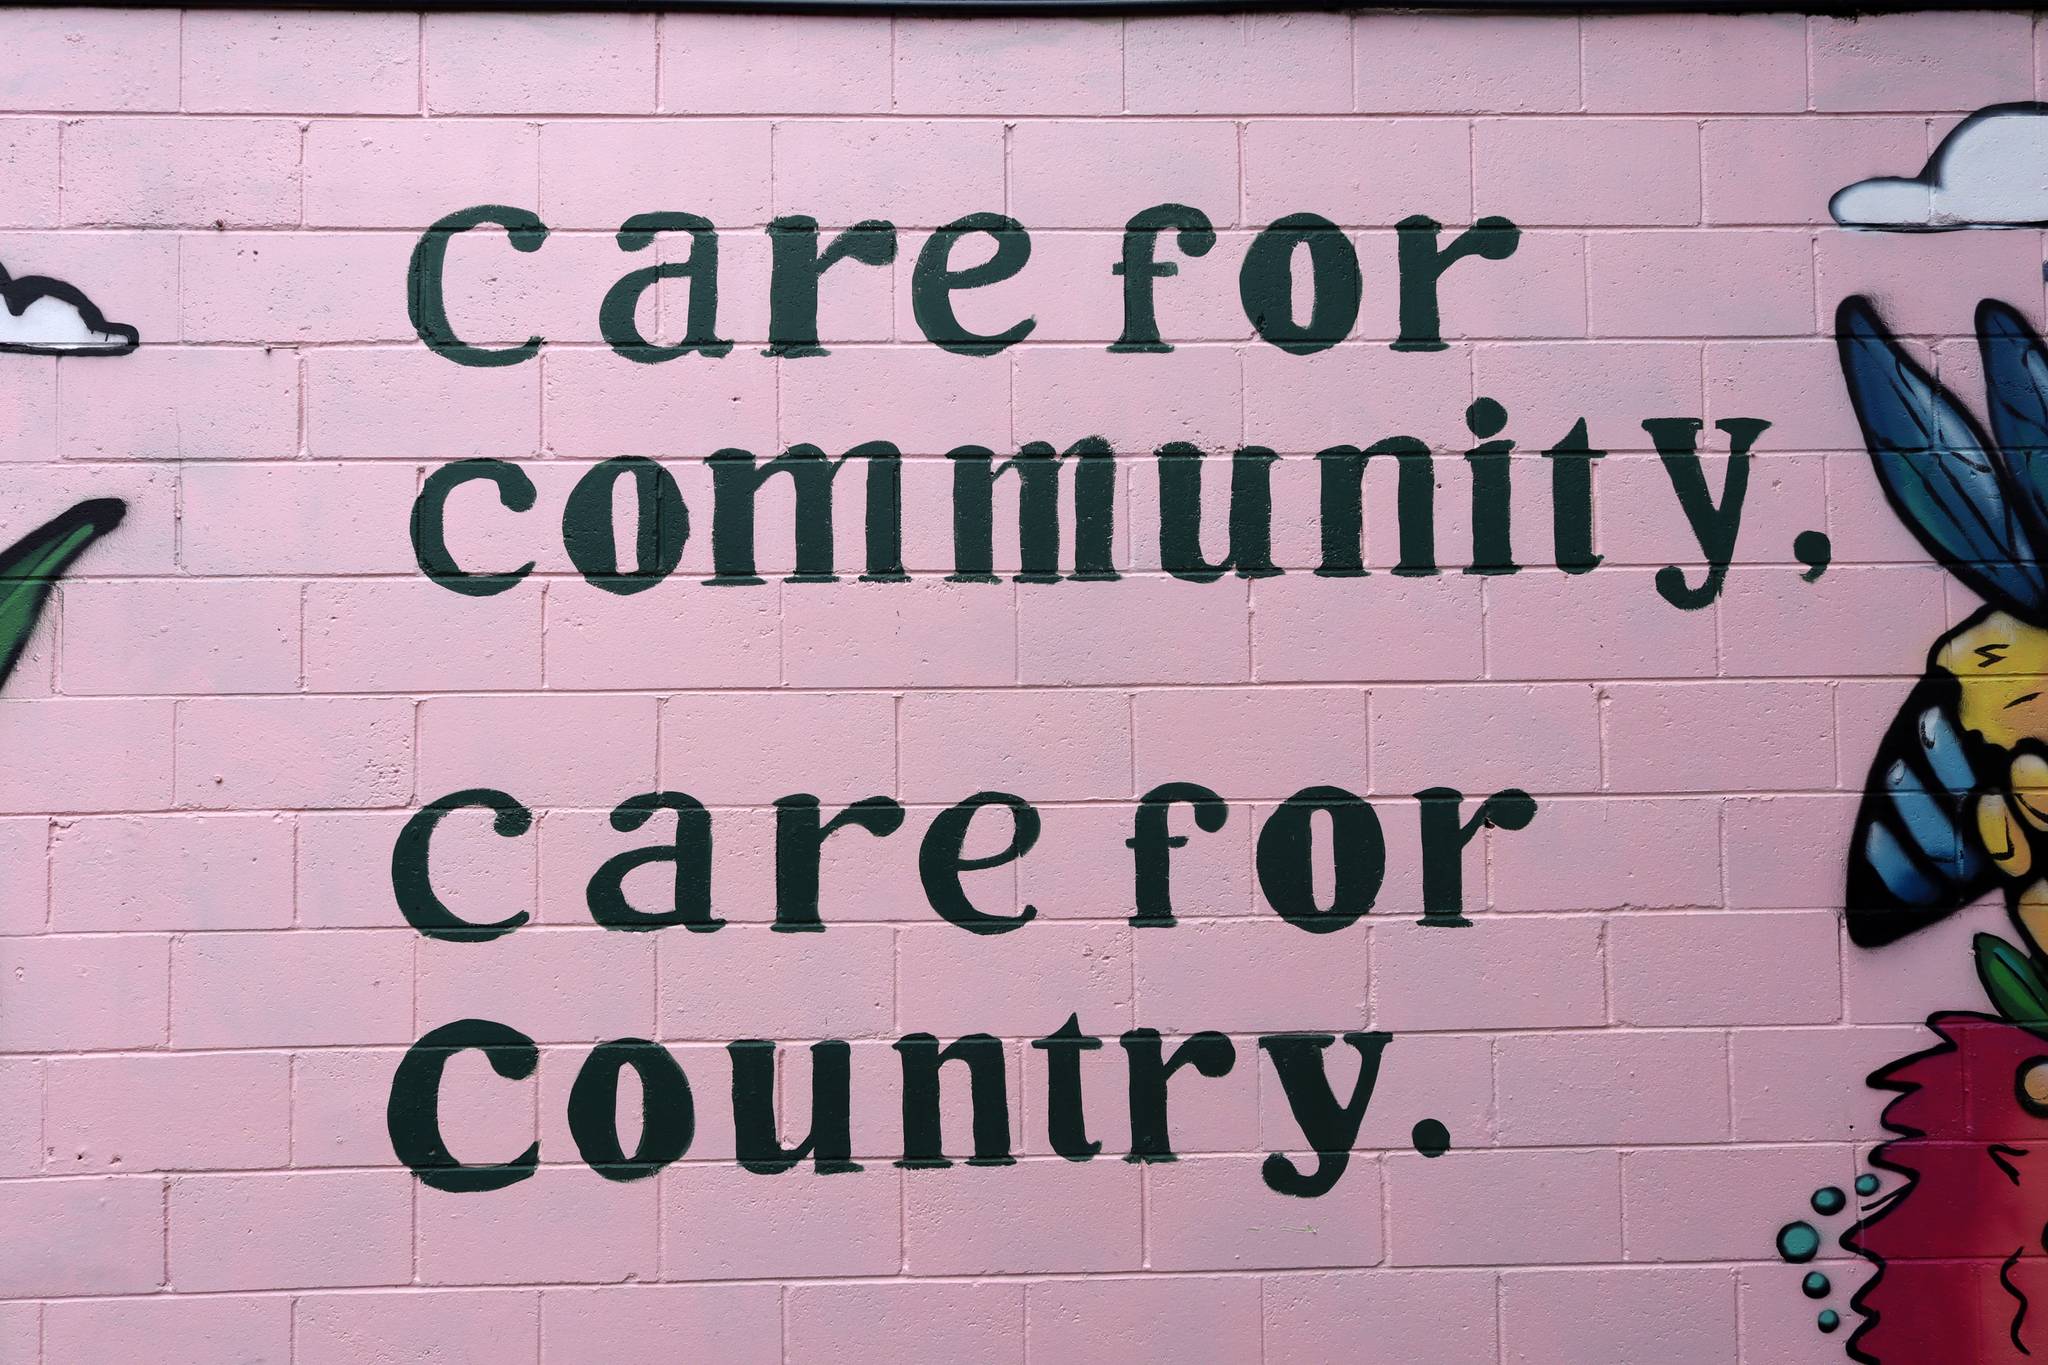 Ailie Banks, Merindah Funnell&mdash;Care for Community, Care for Country